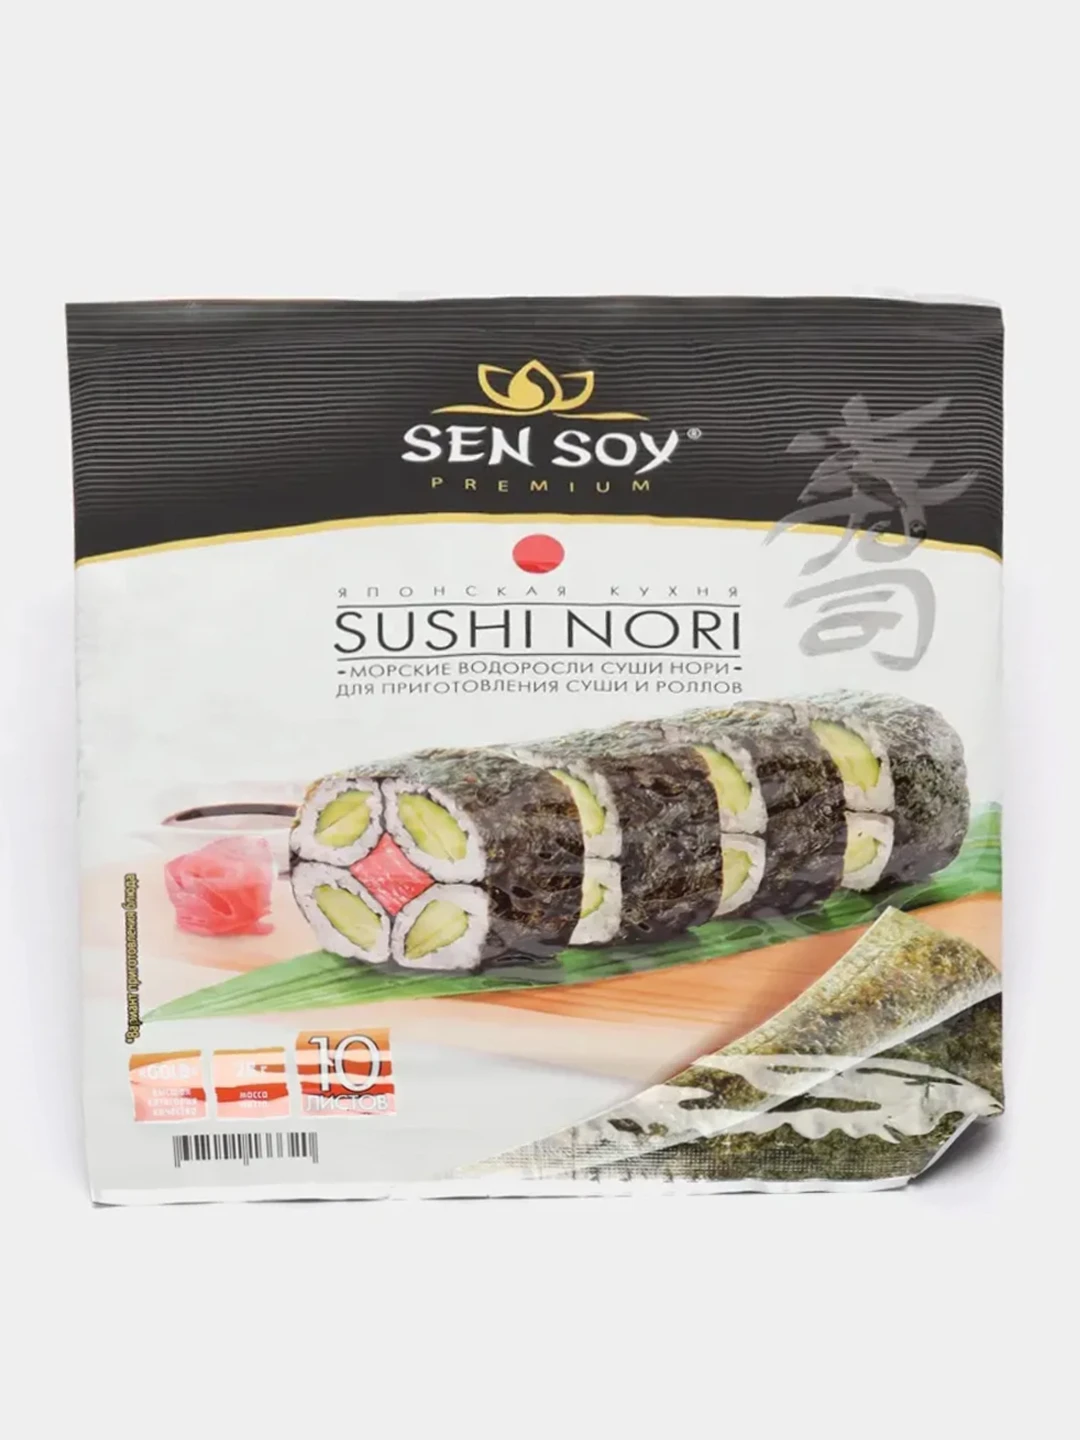 Sen soy набор для суши цена фото 109